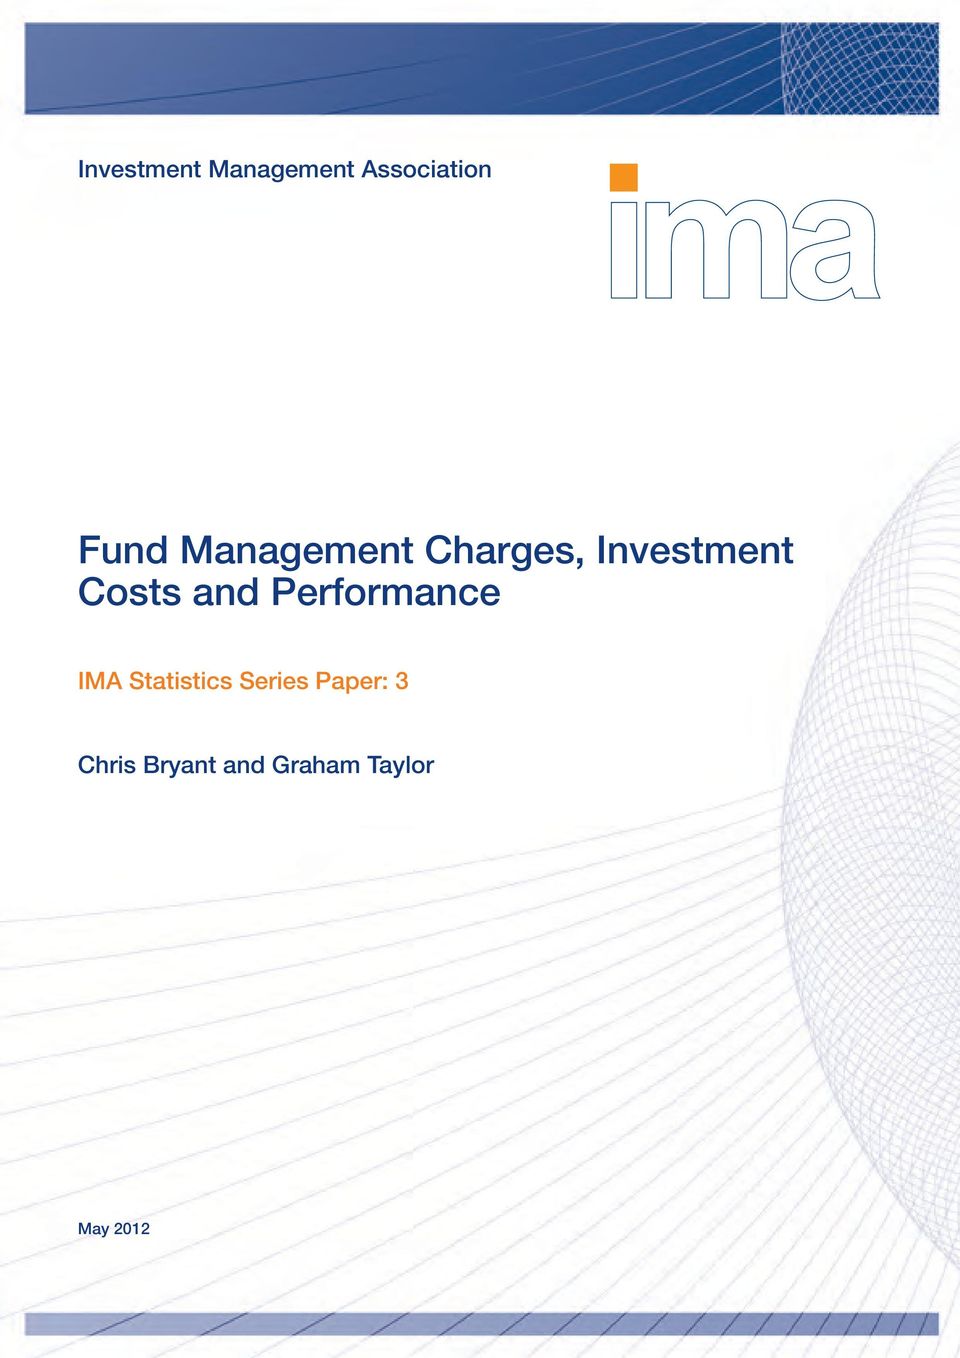 Performance IMA Statistics Series Paper: